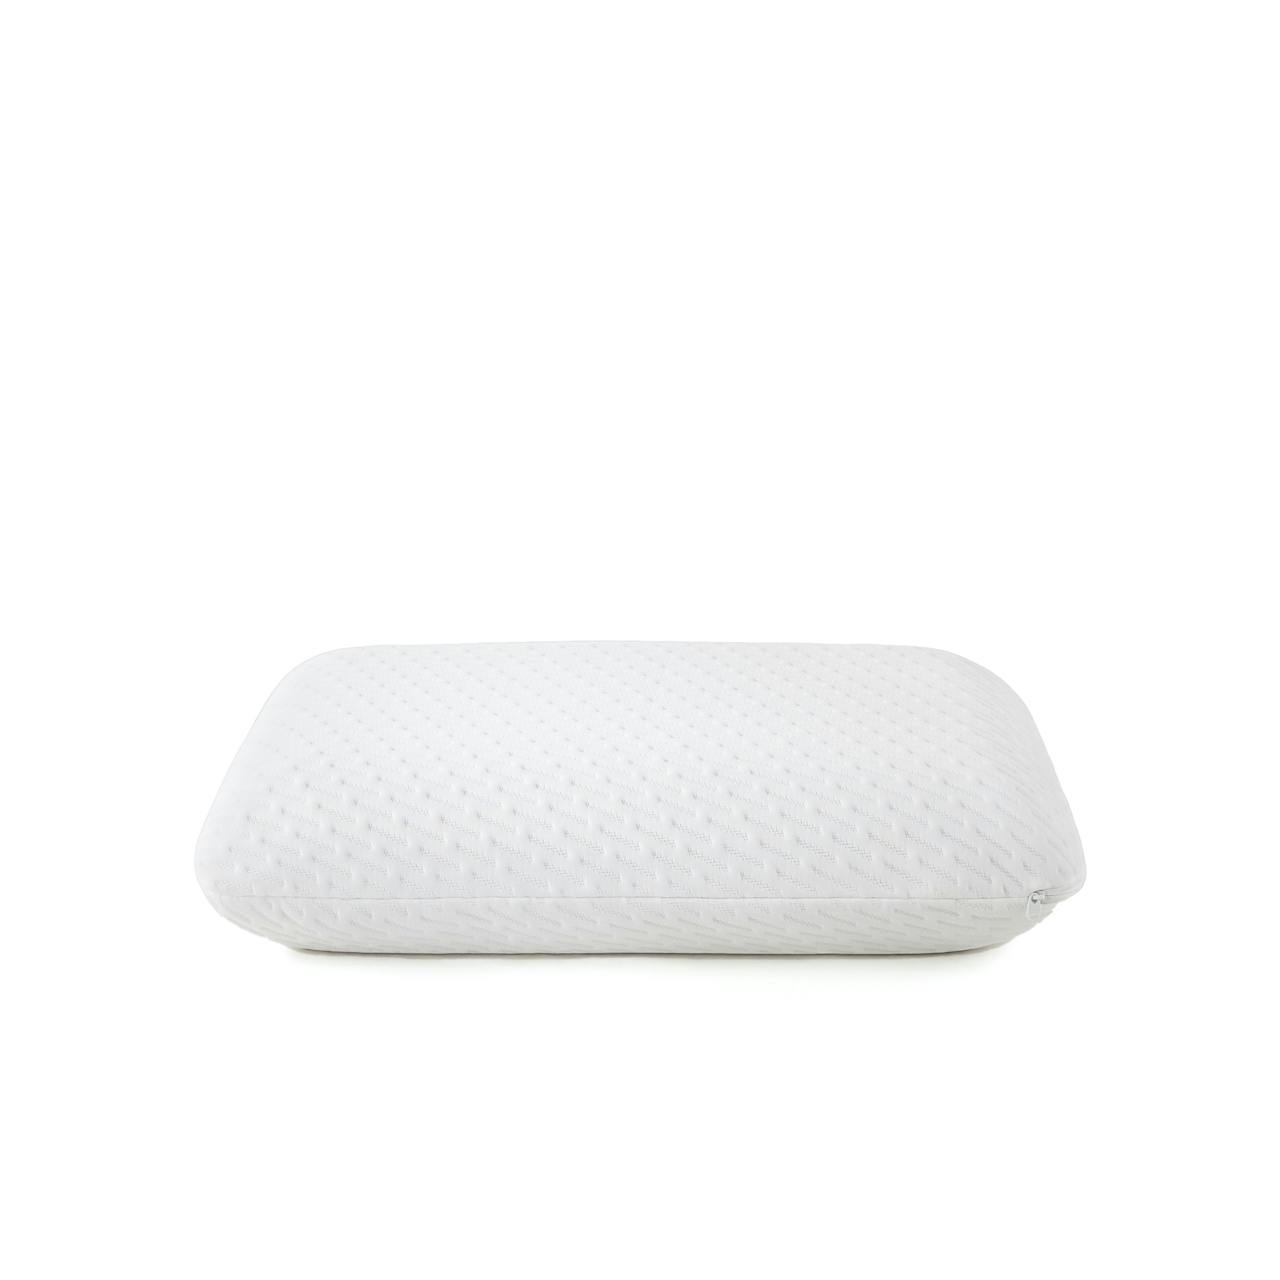 Tuft & Needle Original Foam Pillow - Standard